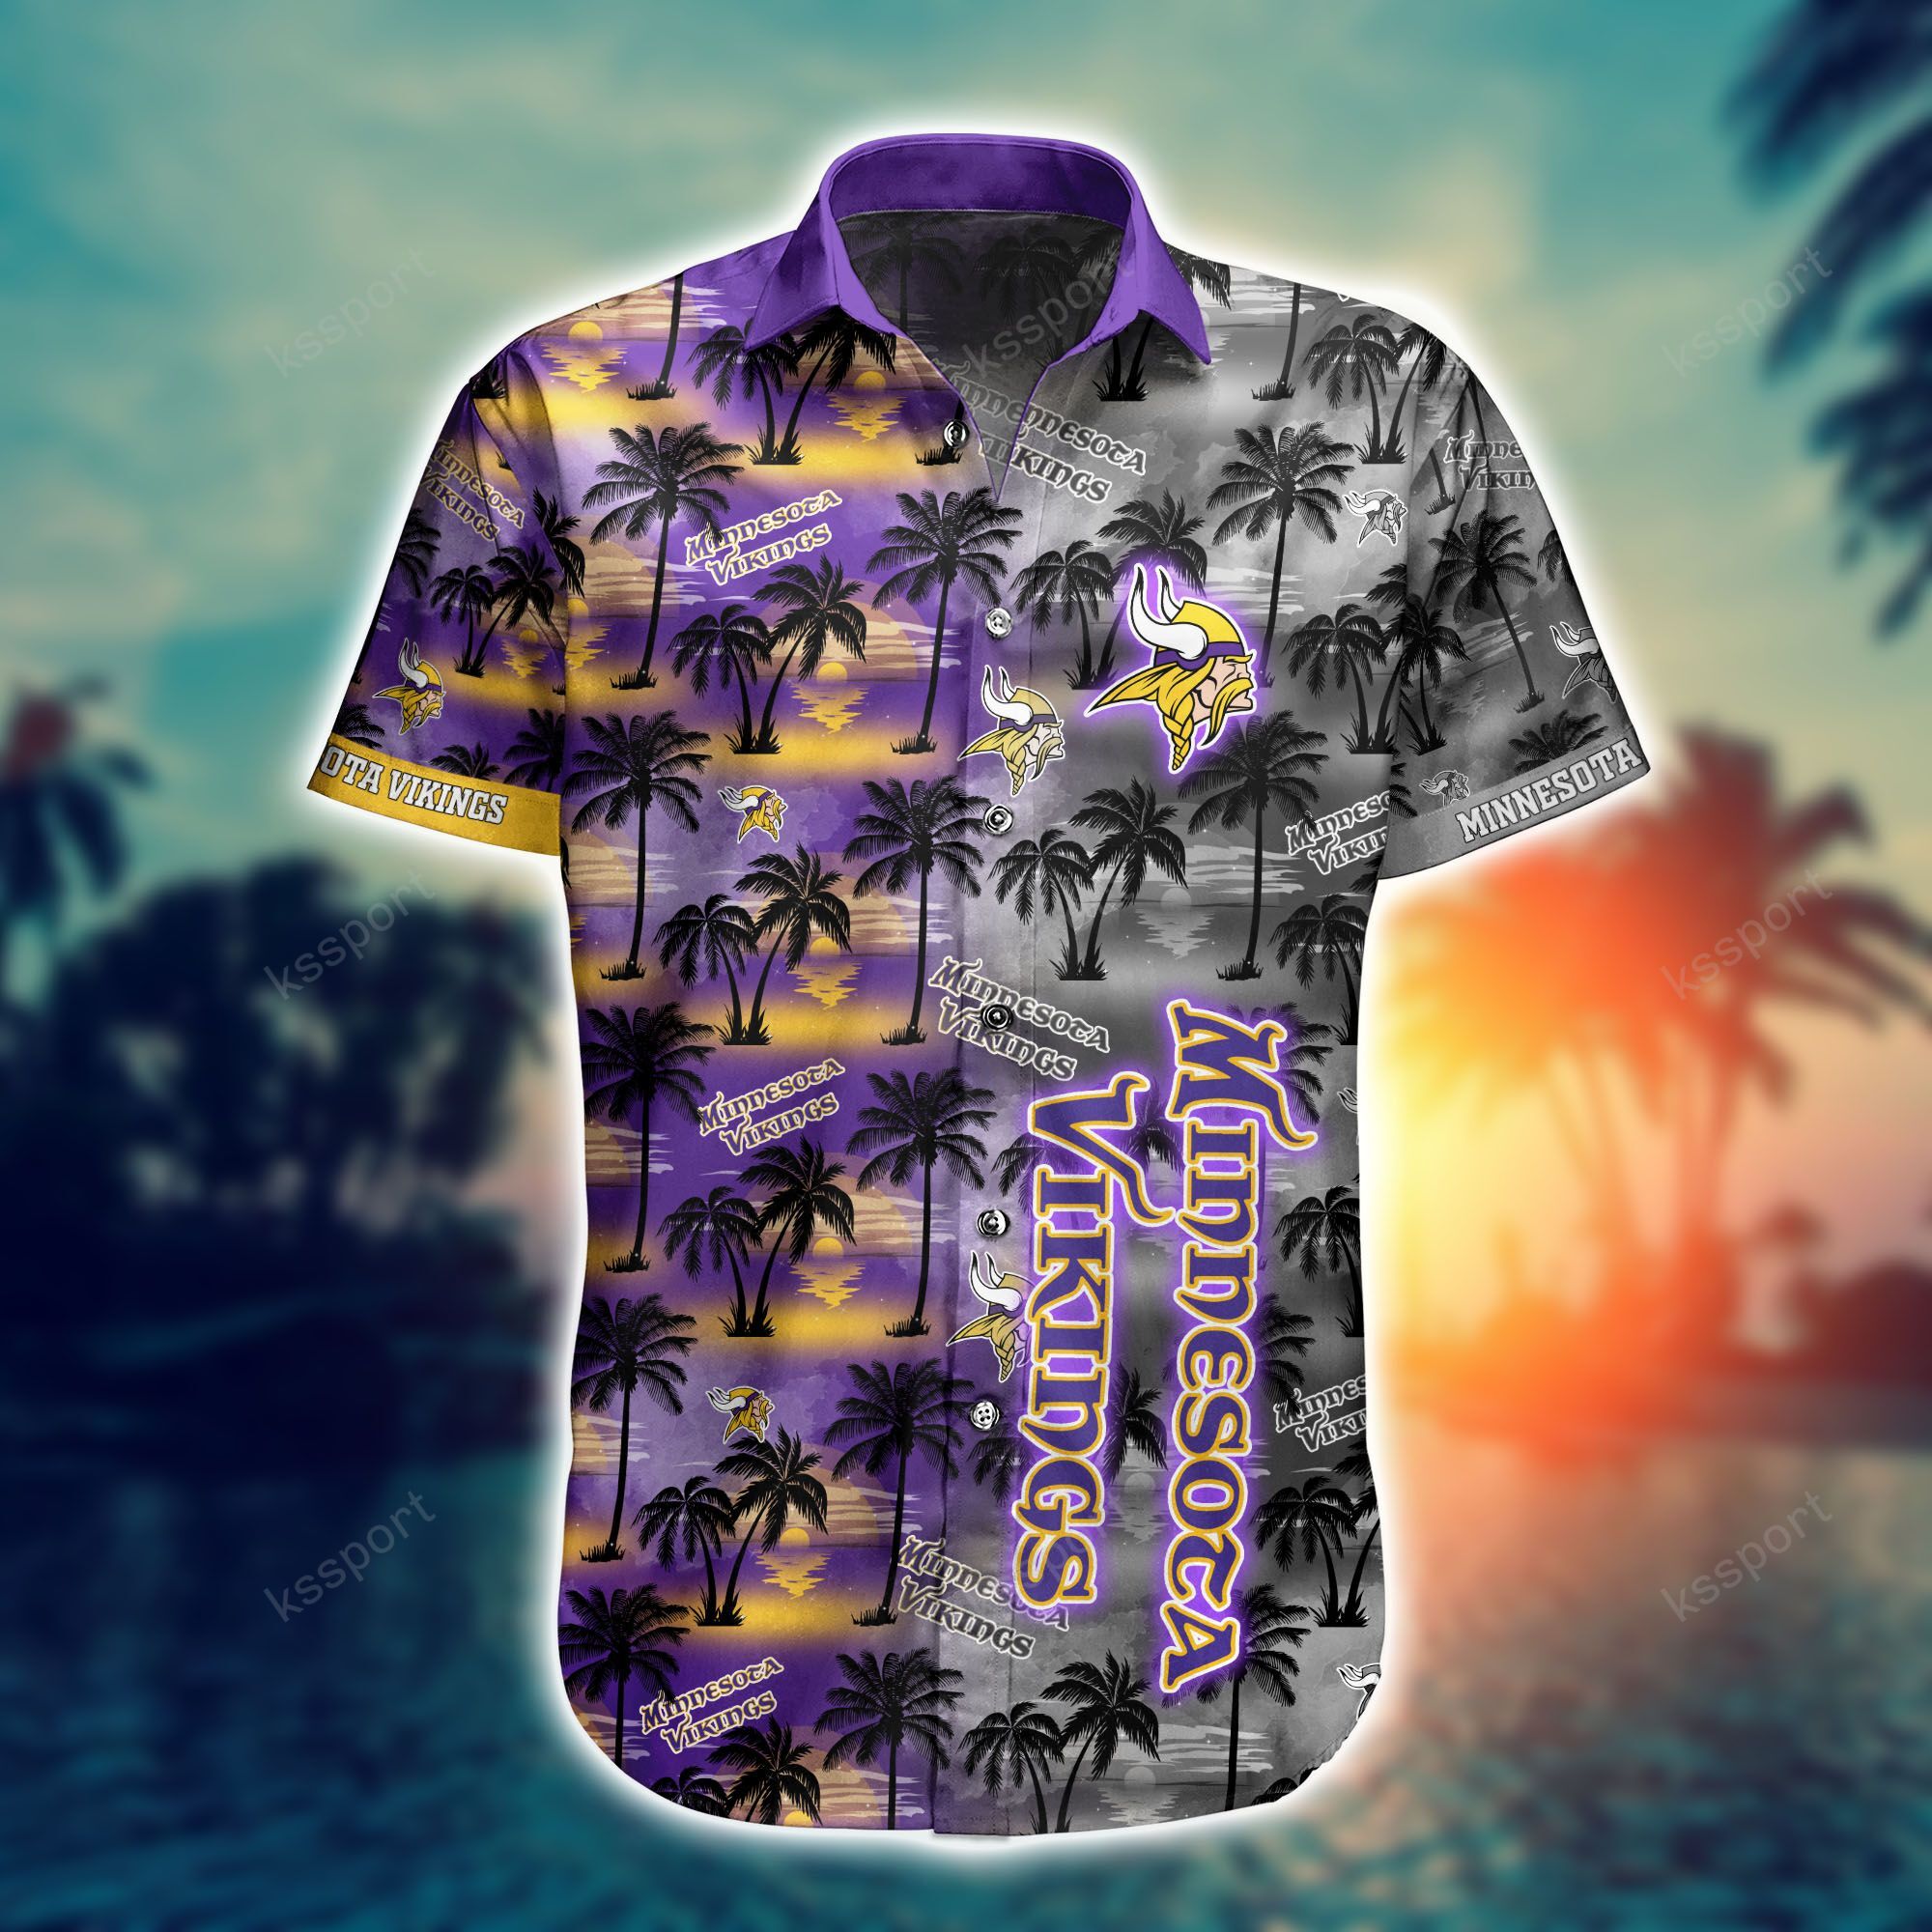 Hawaiian shirt and shorts is a great way to look stylish at a beach party 131